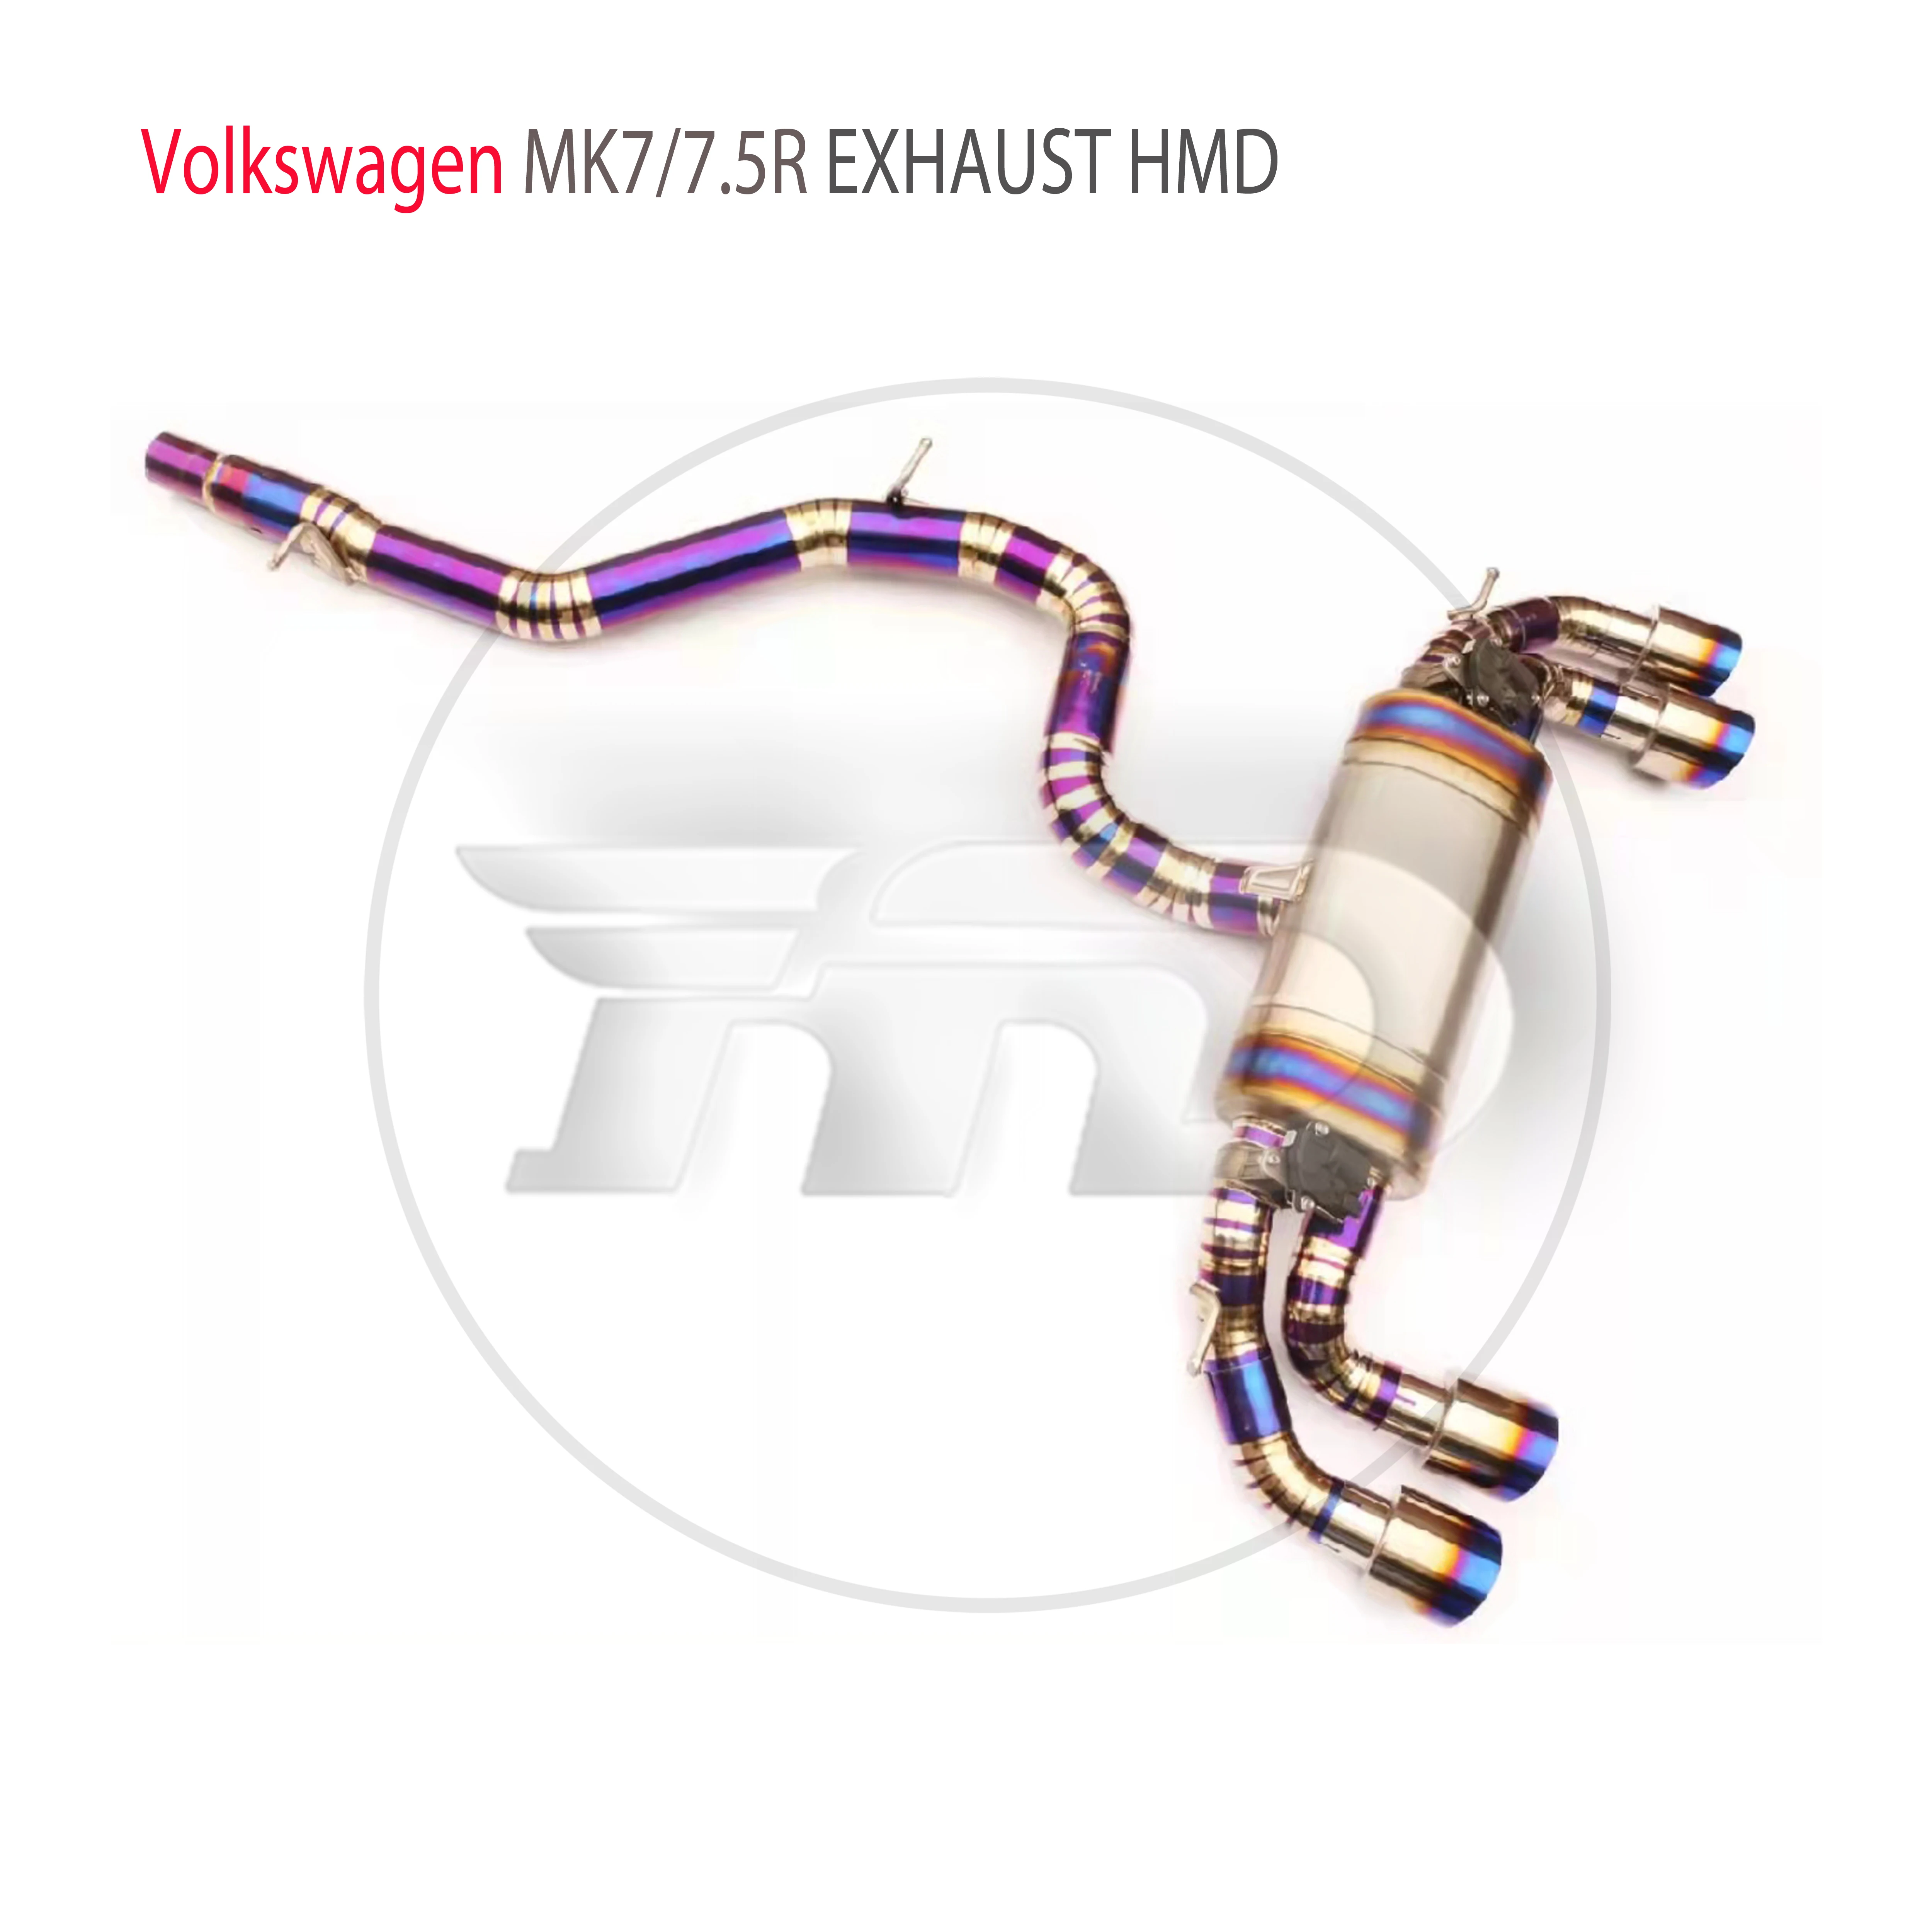 

HMD Titanium Alloy Exhaust System Valve Catbak for Volkswagen Golf MK7R MK7.5R Car Accessories Auto Replacement Parts